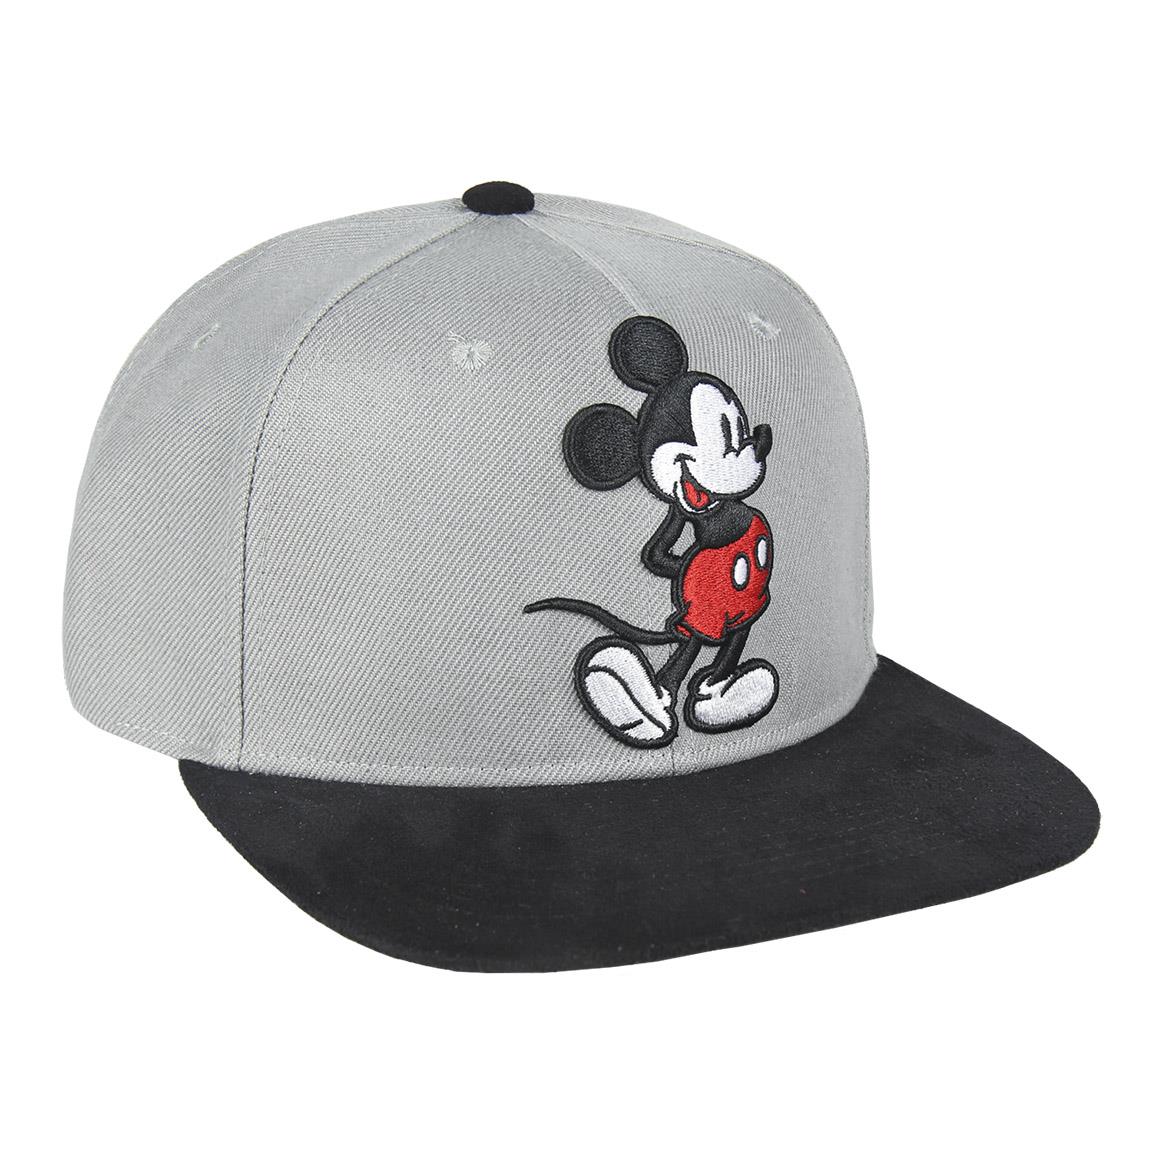 DISNEY - Cap - Mickey Mouse